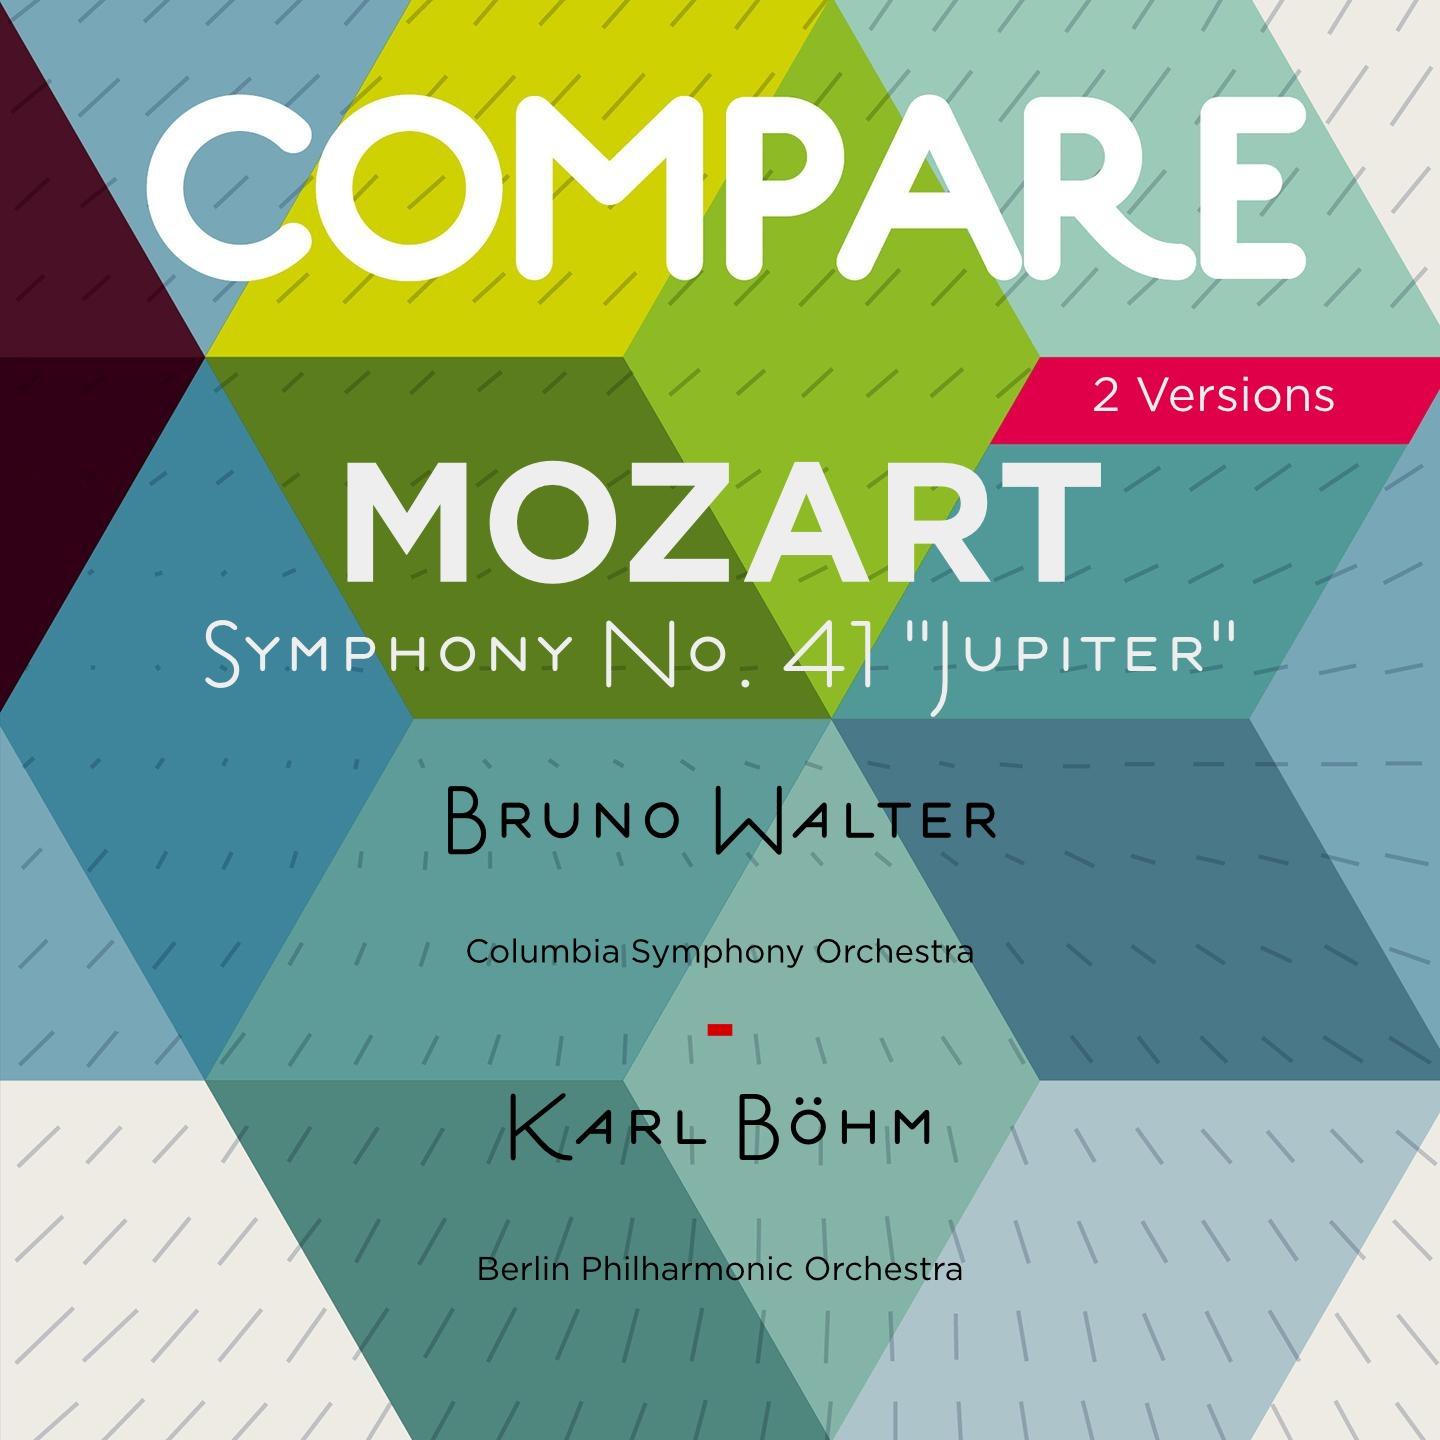 Mozart: Symphony No. 41 " Jupiter", Bruno Walter vs. Karl B hm Compare 2 Versions